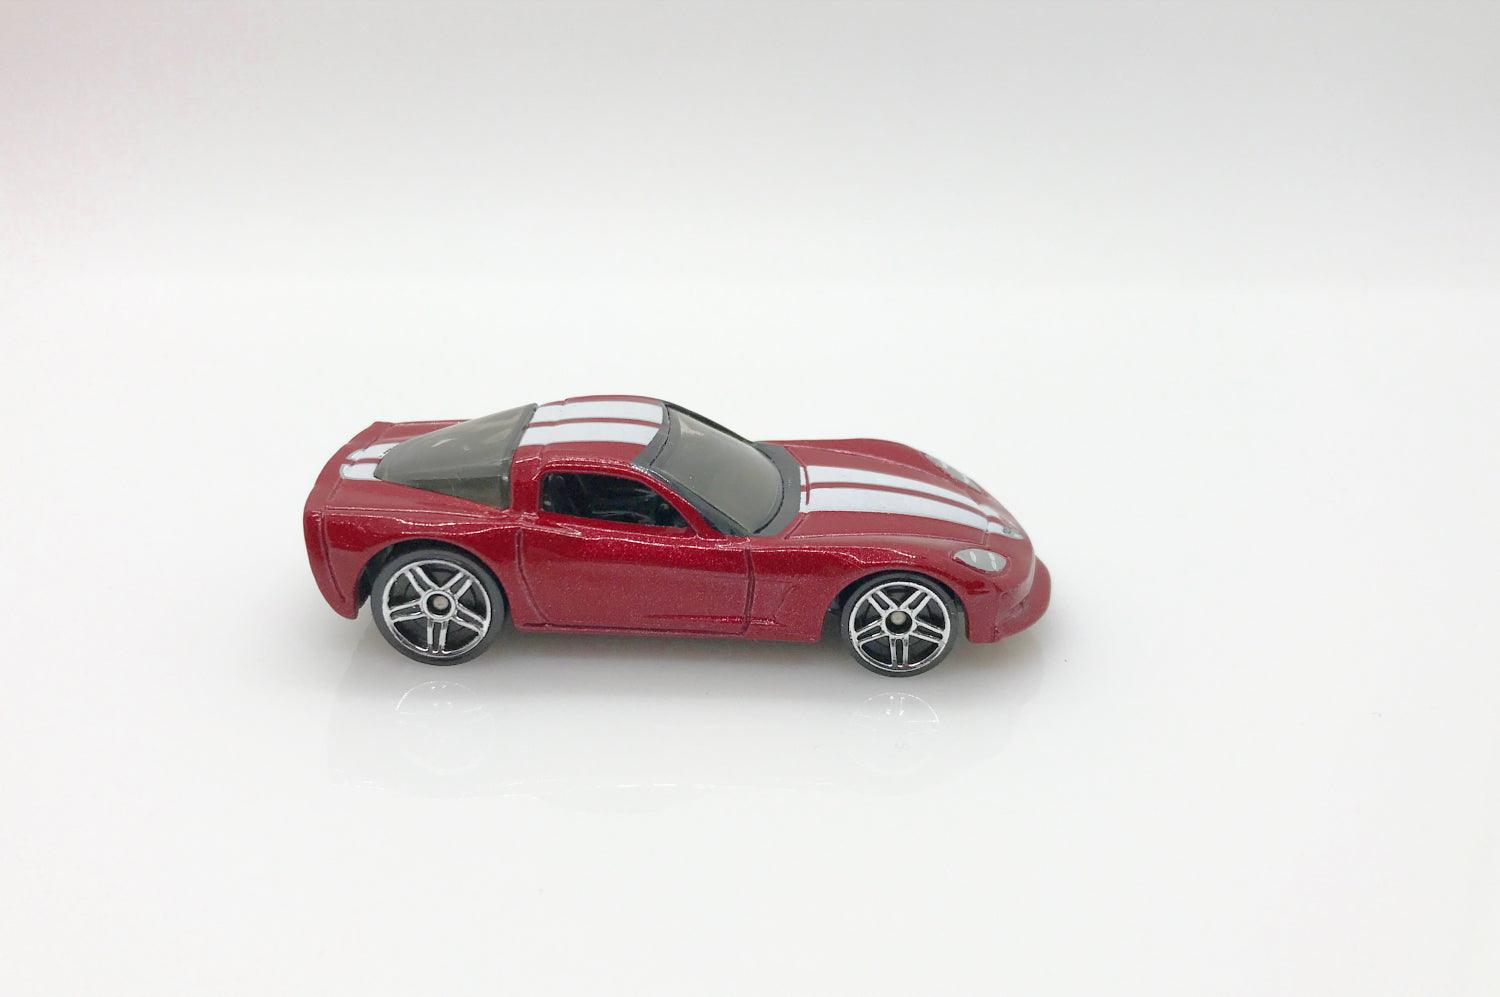 Hot Wheels Red C6 Corvette (2007) - Lamoree’s Vintage